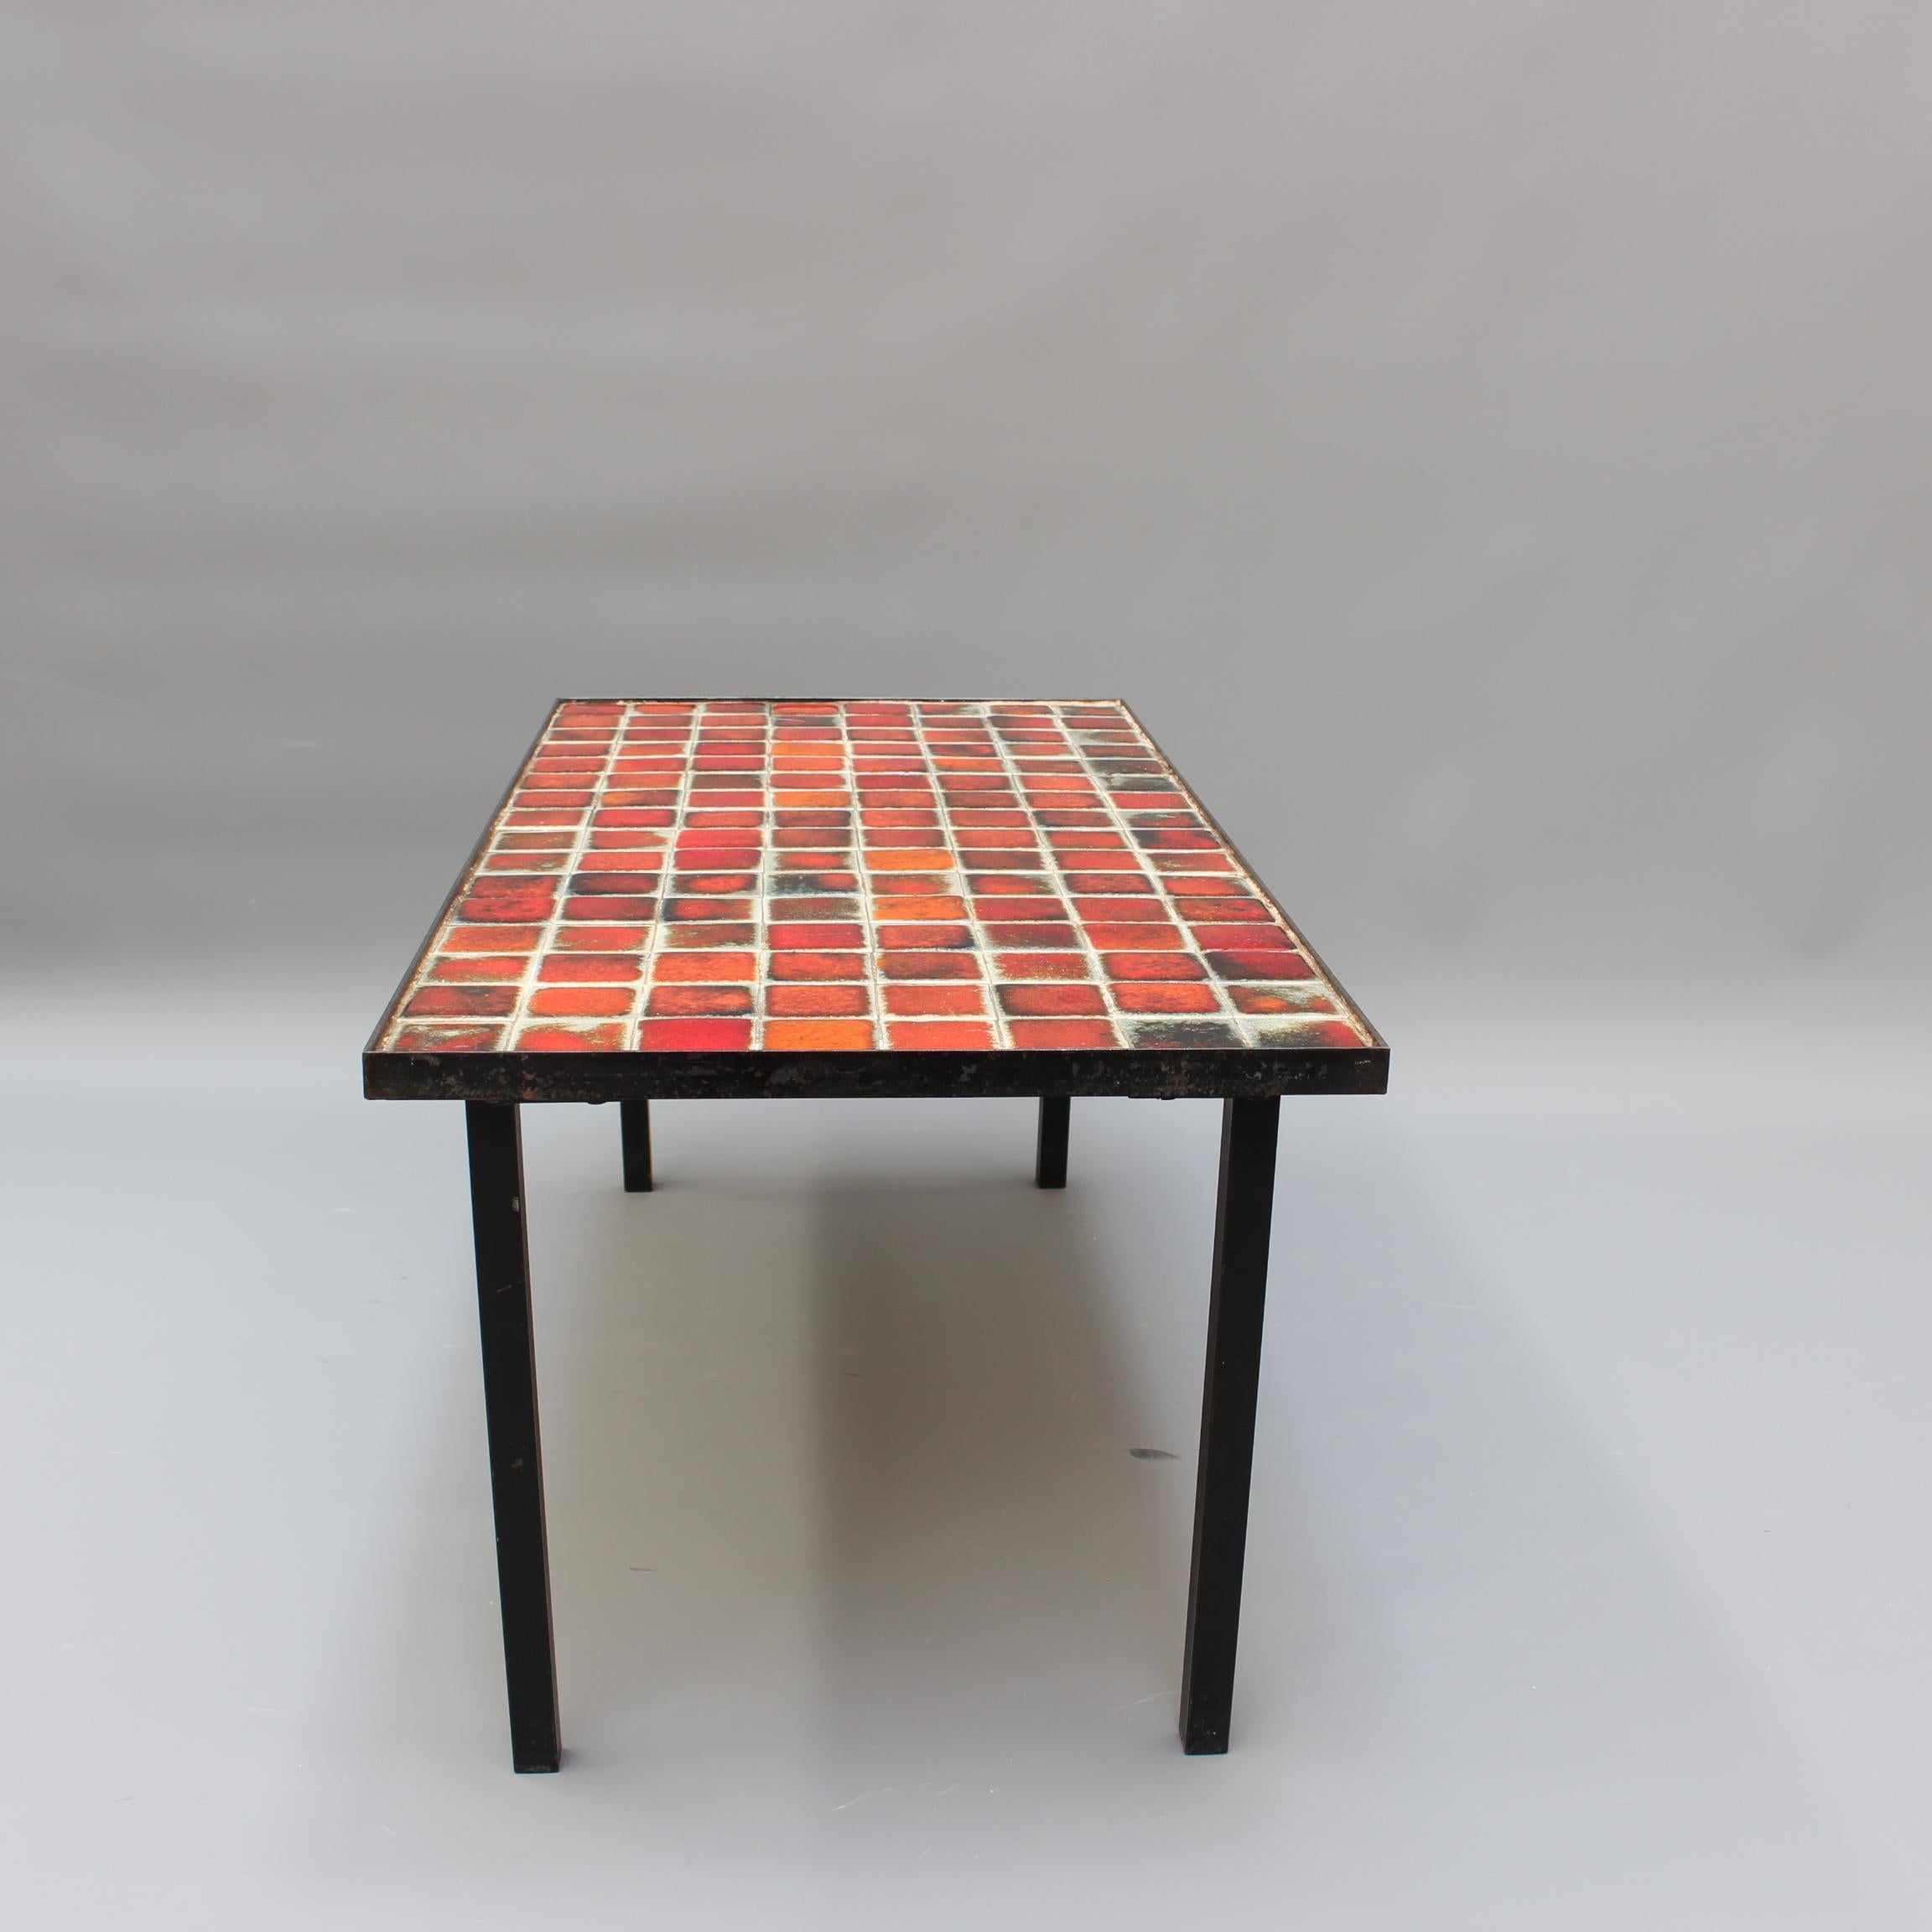 ceramic table tiles